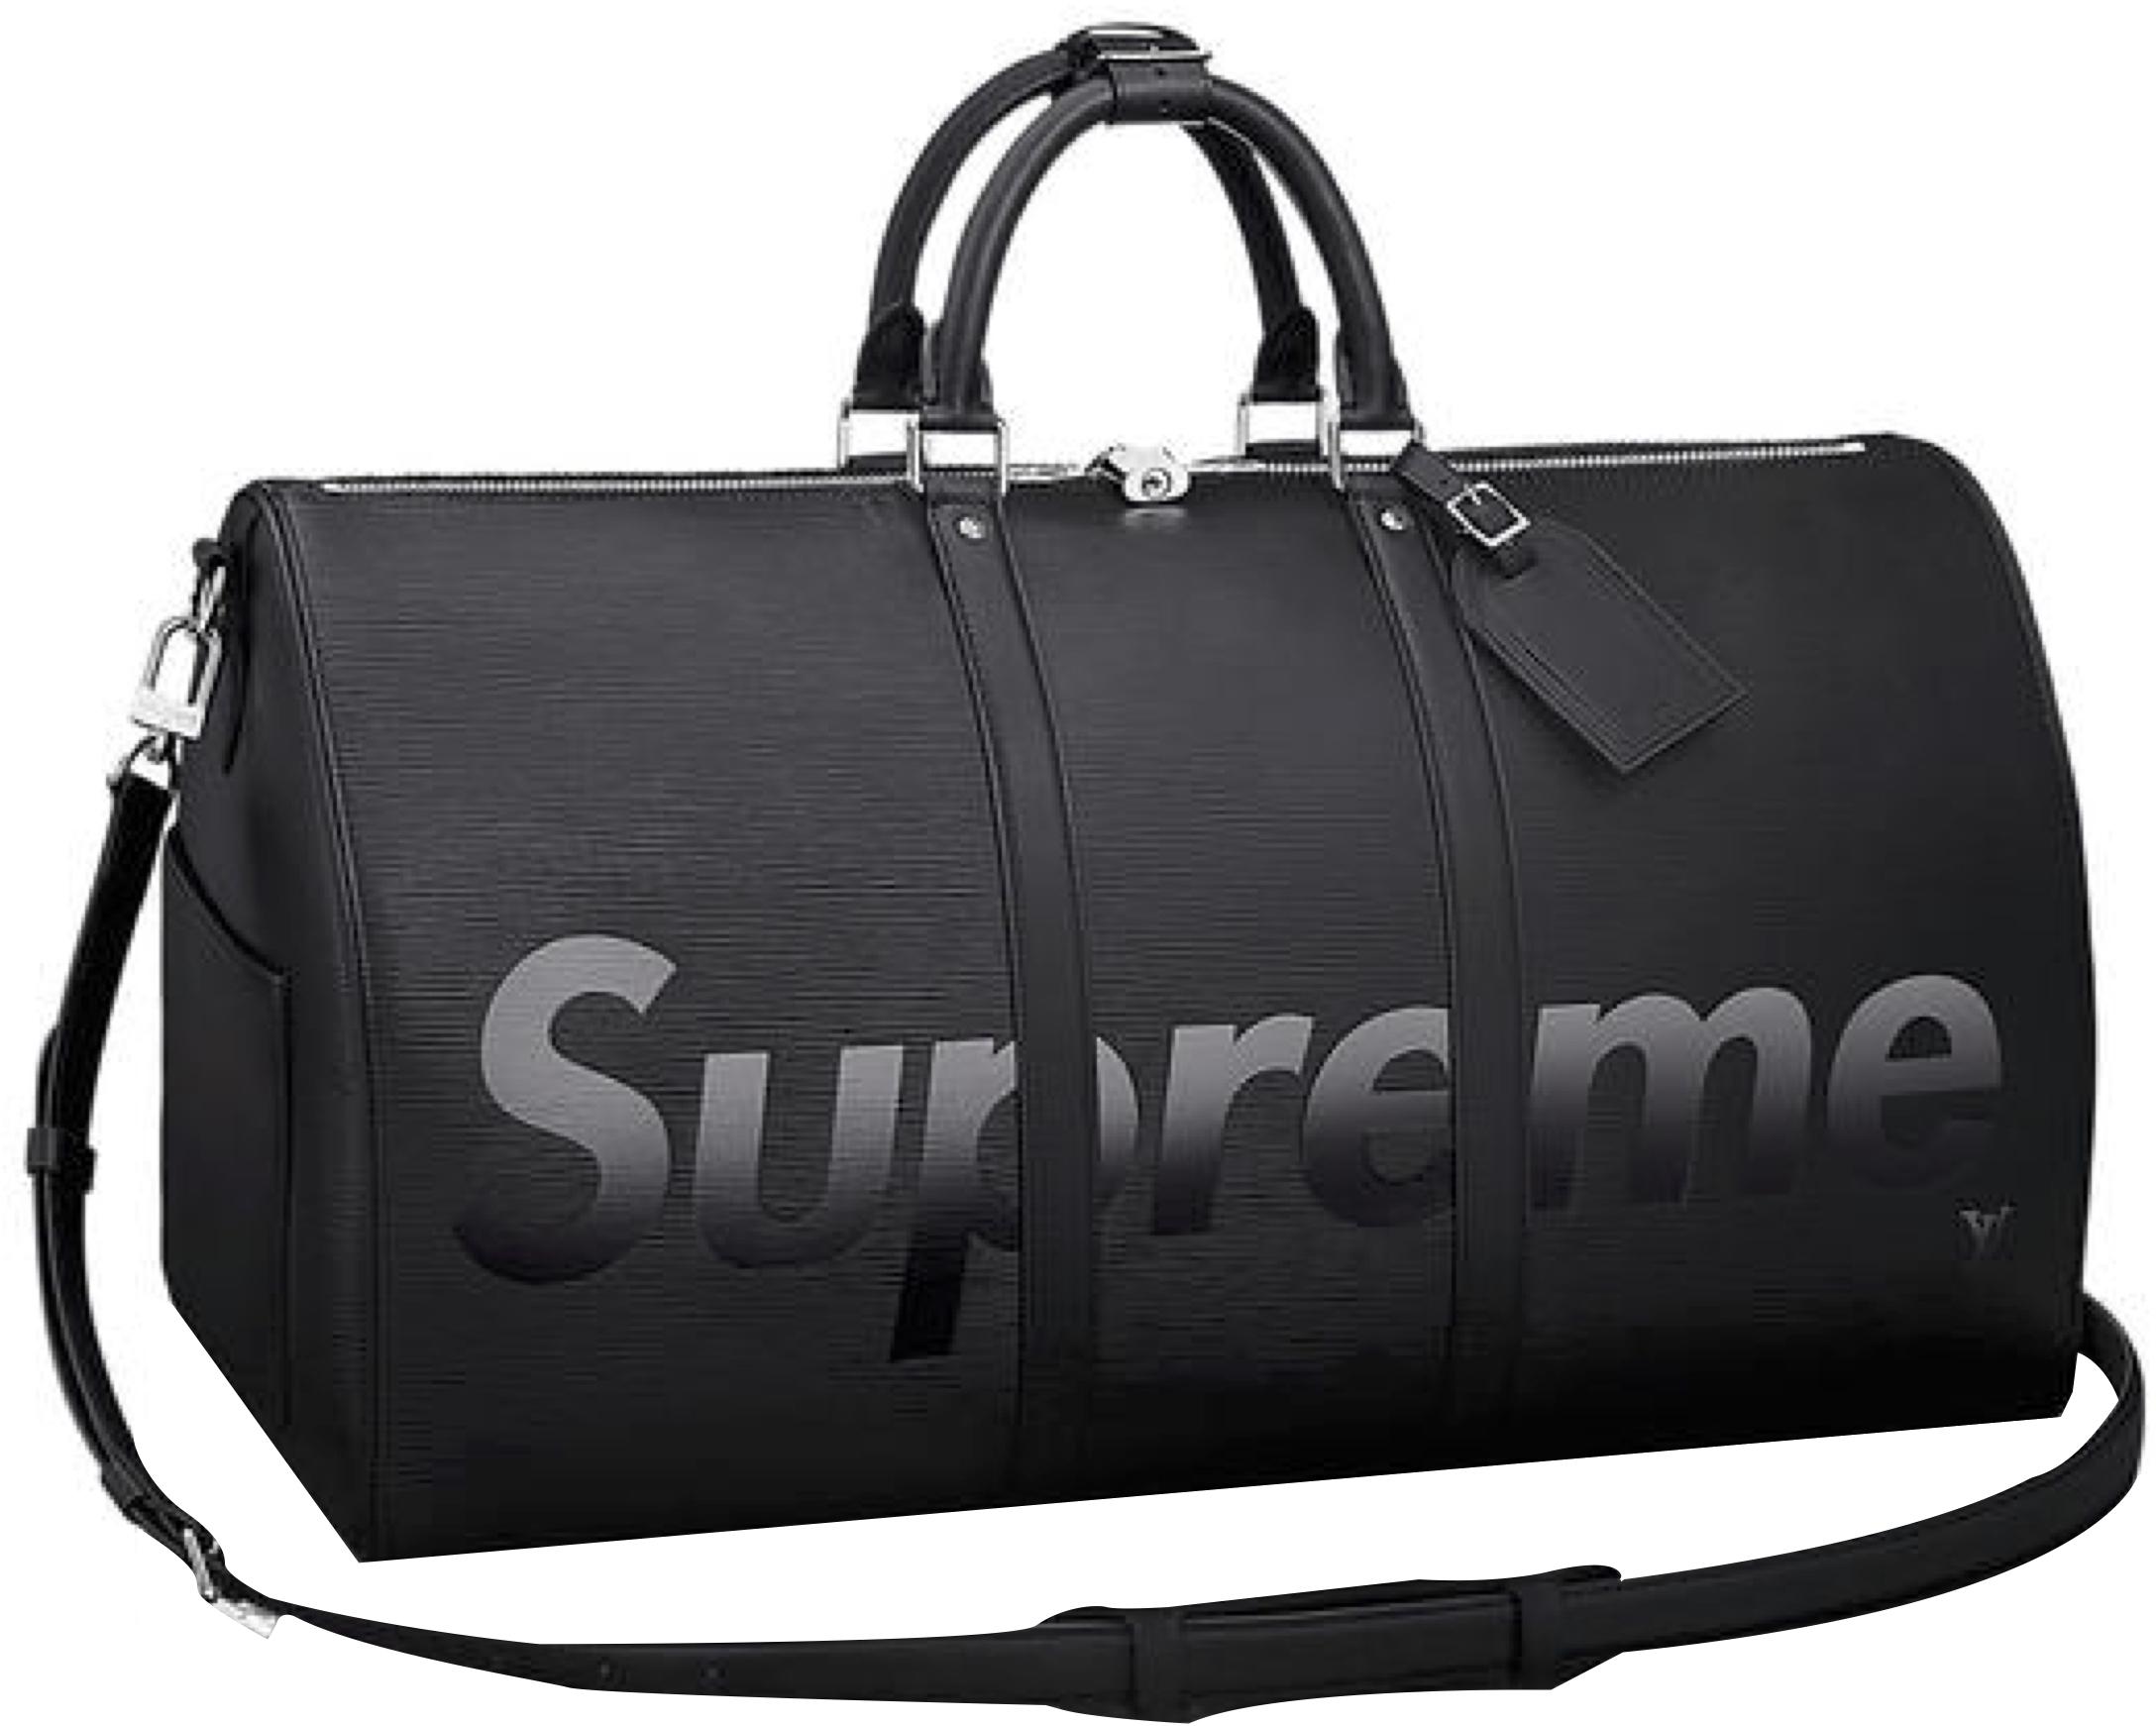 Lyst - Supreme Louis Vuitton X Keepall Bandouliere Epi 55 Black in Black